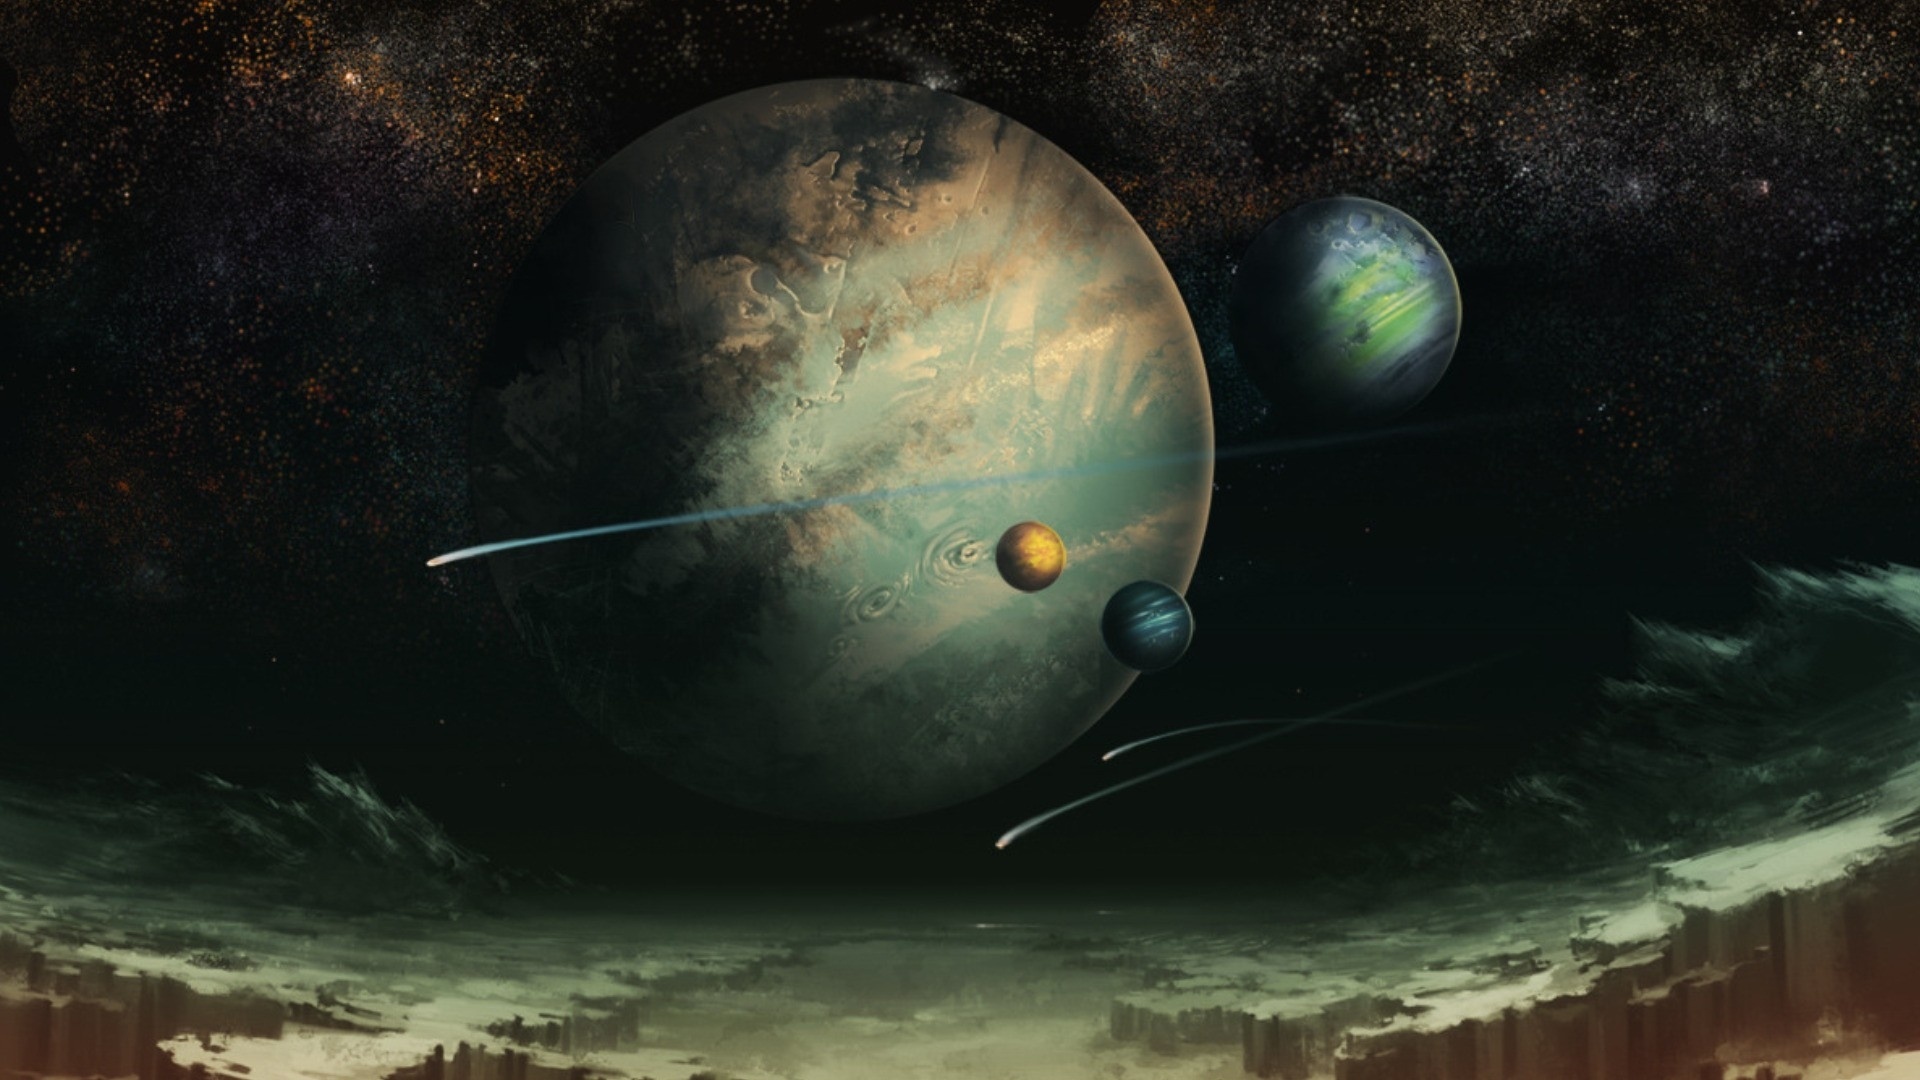 Alien Planet Art wallpaper for computer